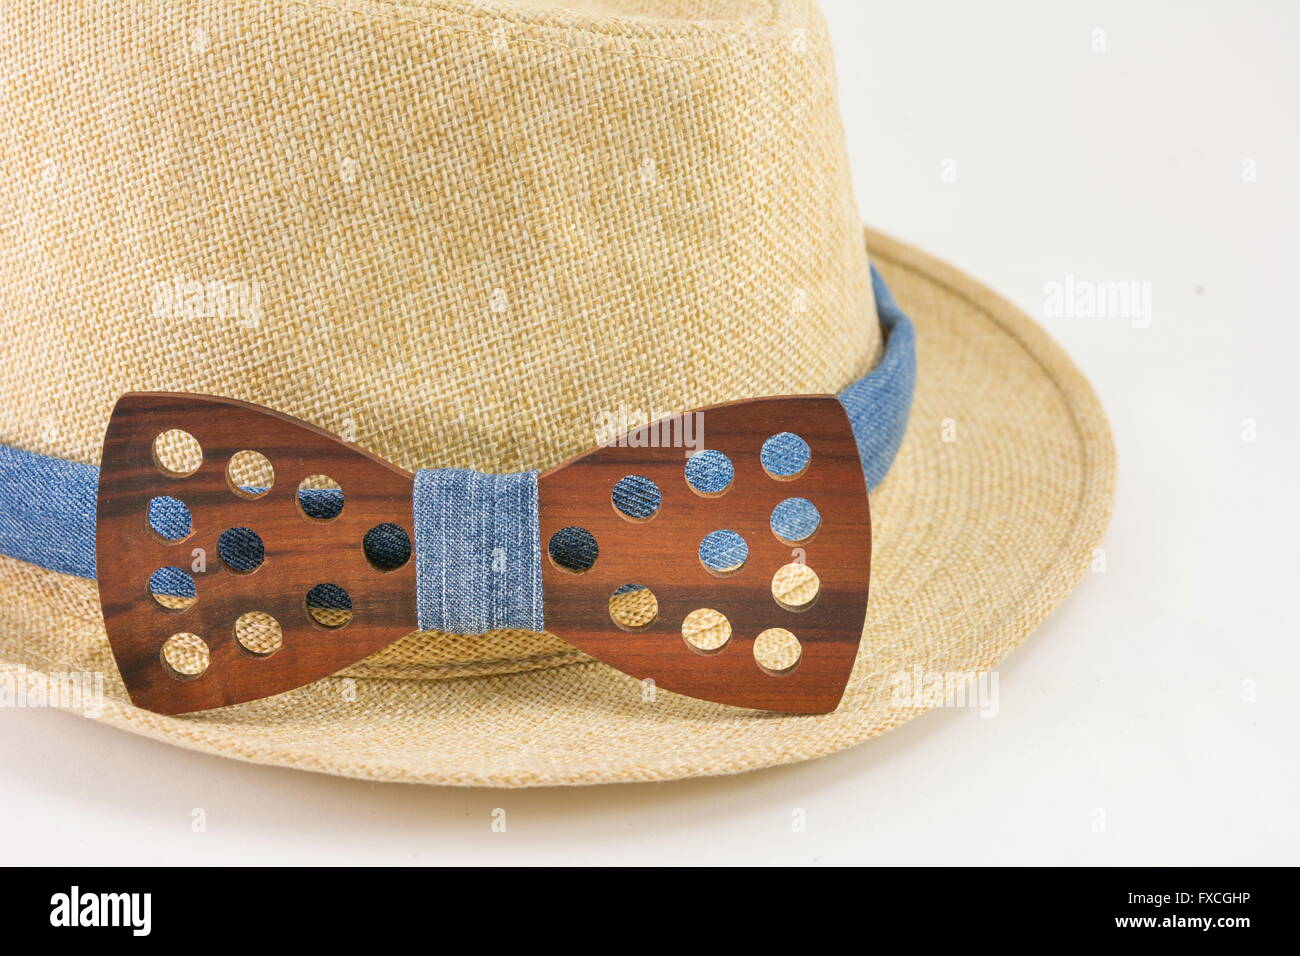 Wooden bow tie around a hat. Man accessories Stock Photo